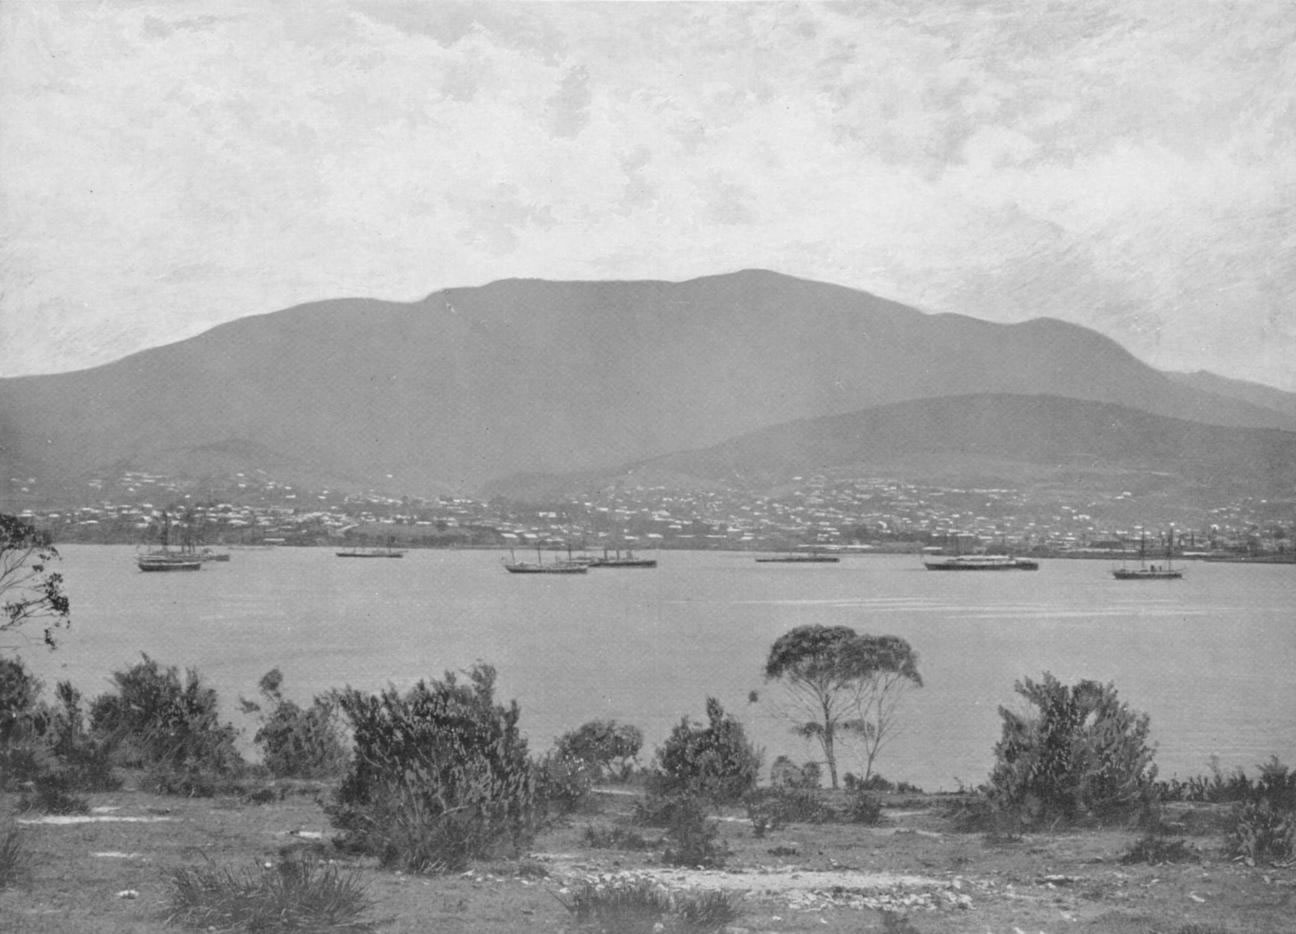 Hobart, Tasmania from TheGenealogist's Image Archive